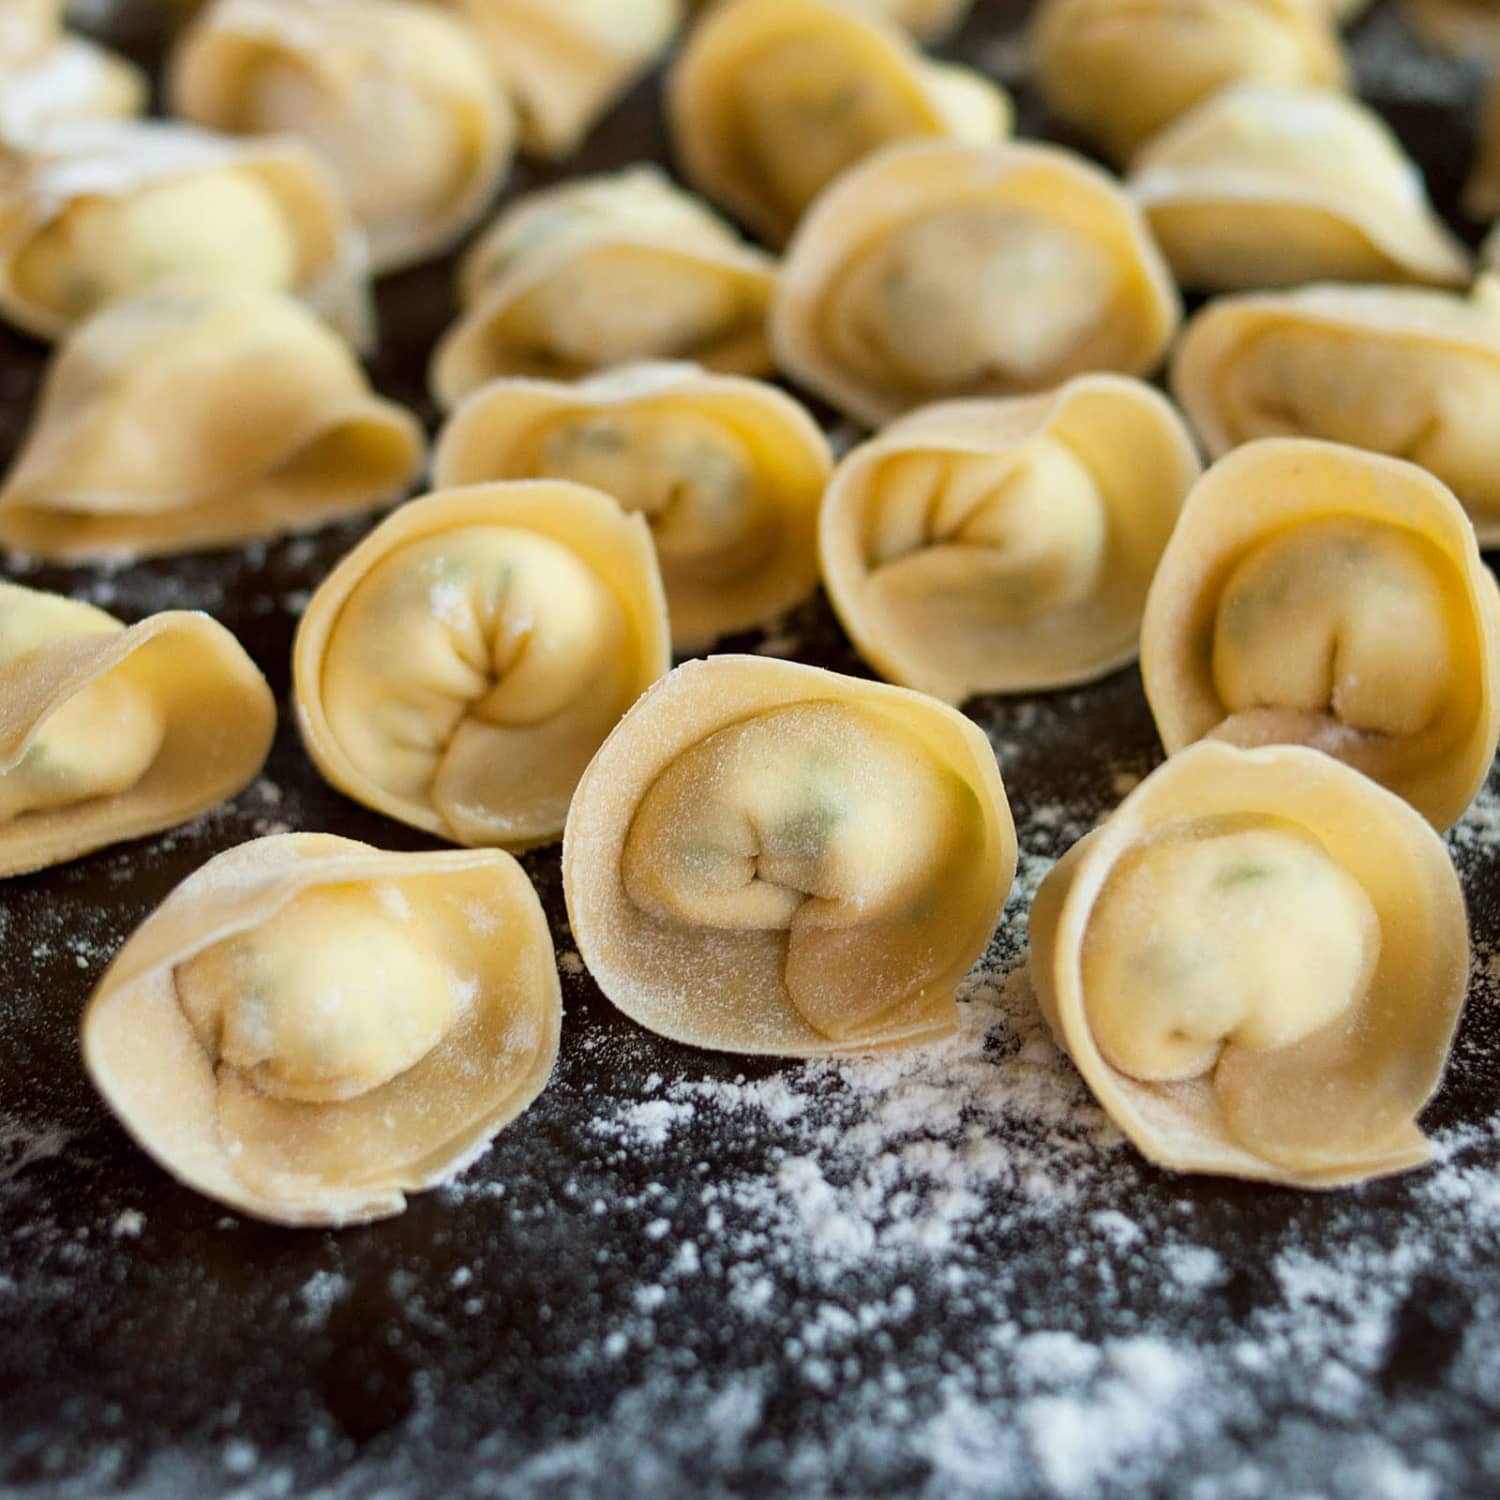 Making Pasta Tortellini Home On Wooden Stock Photo 1884537310